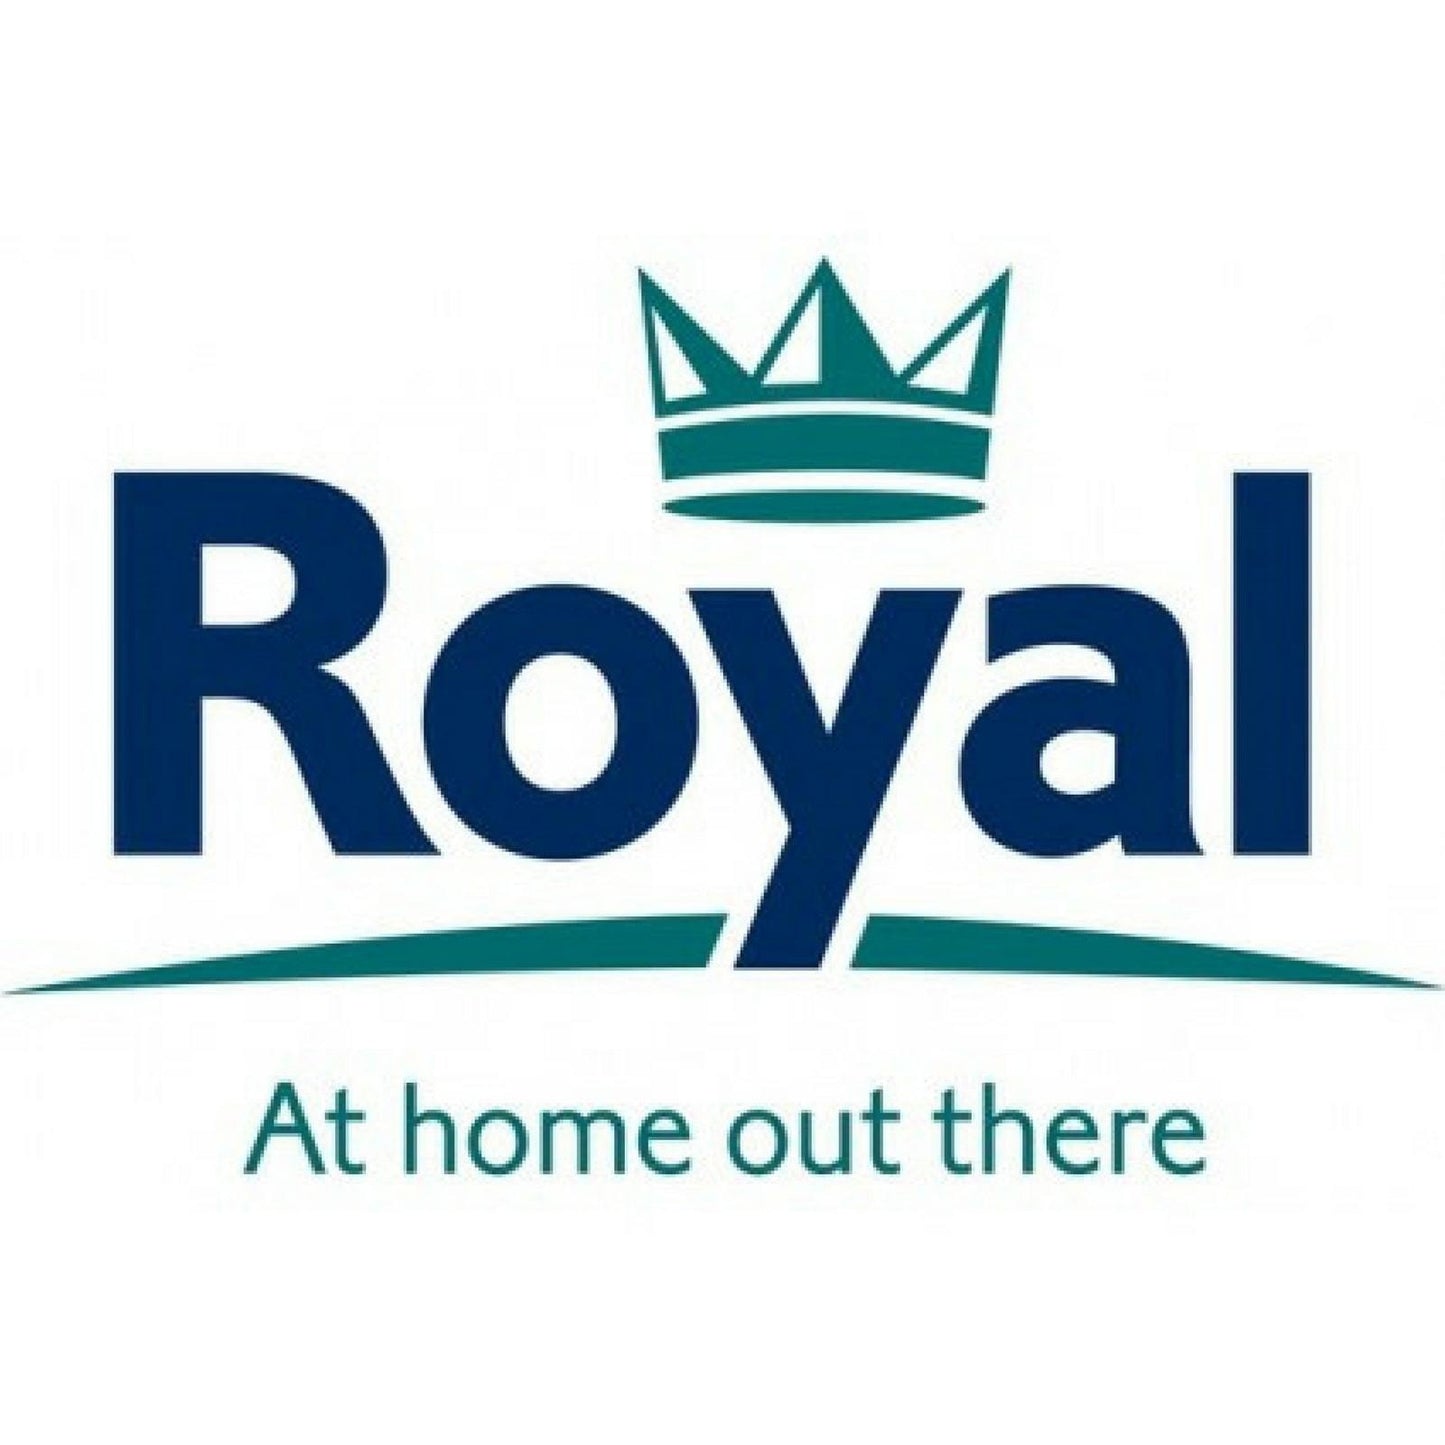 Royal Blockley Driveaway Awning - Blue 302629 - Quality Caravan Awnings